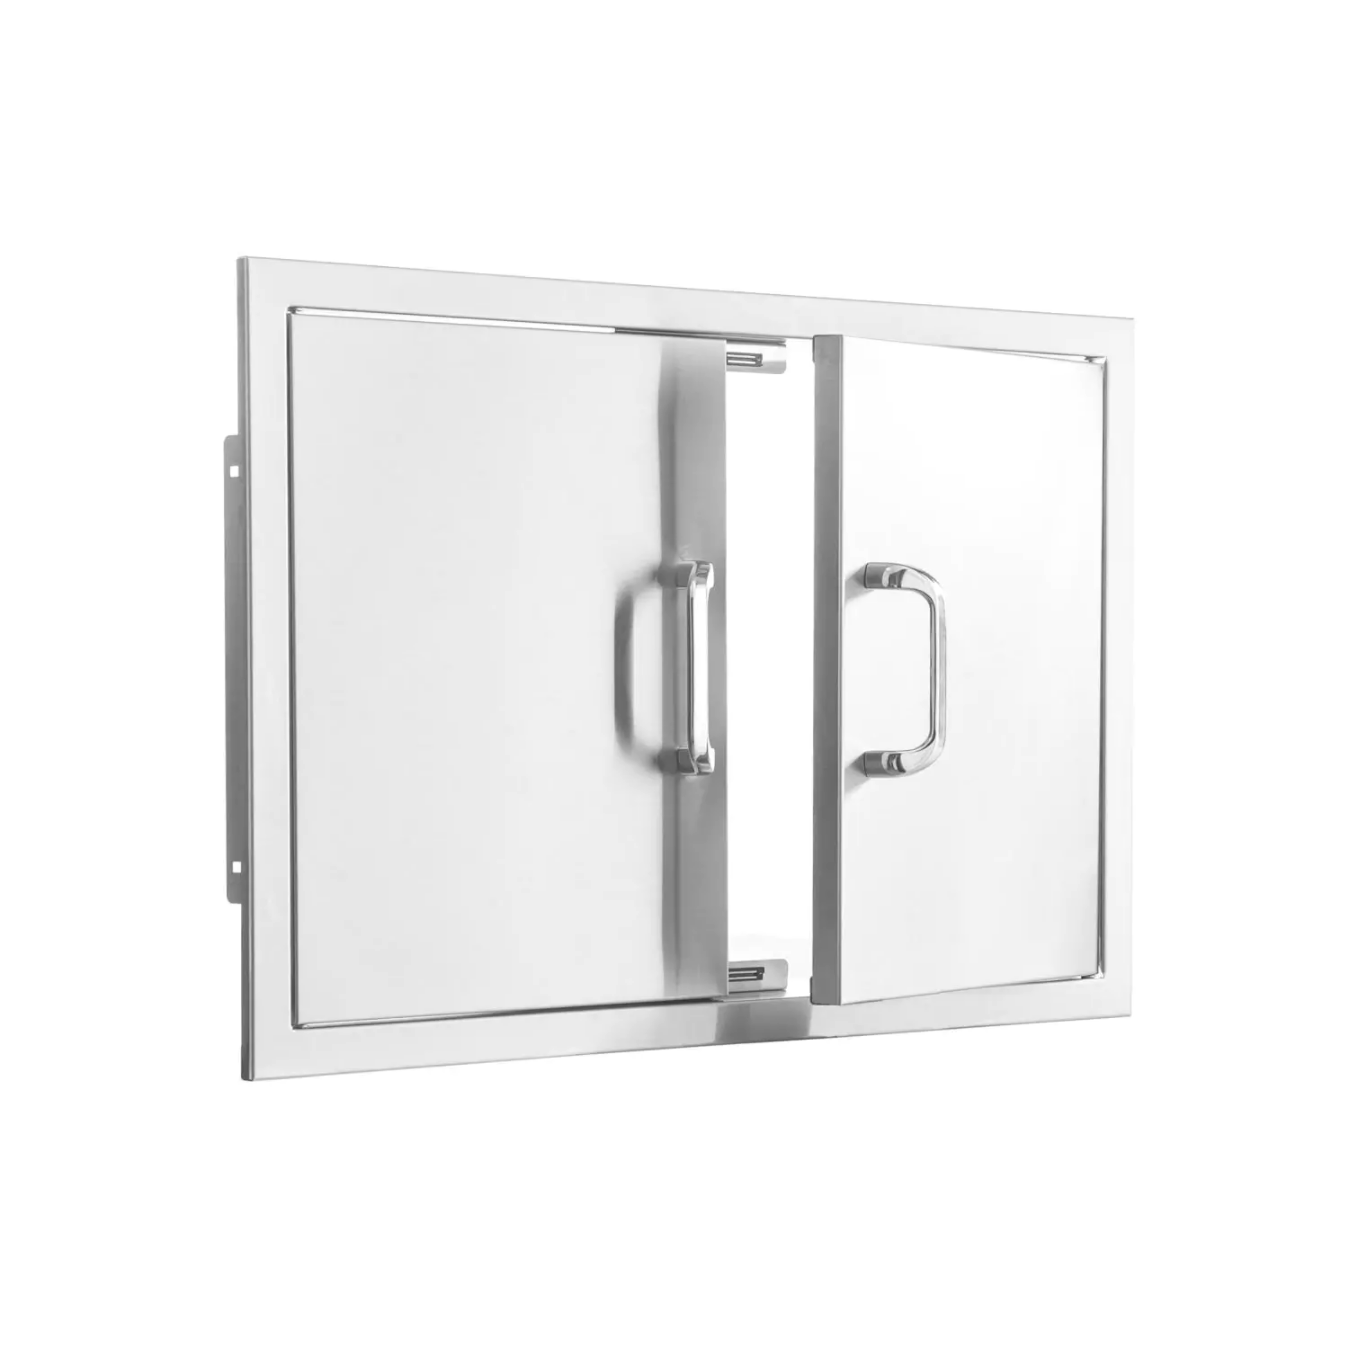 PCM 260 Series 40" Stainless Steel Double Access Door